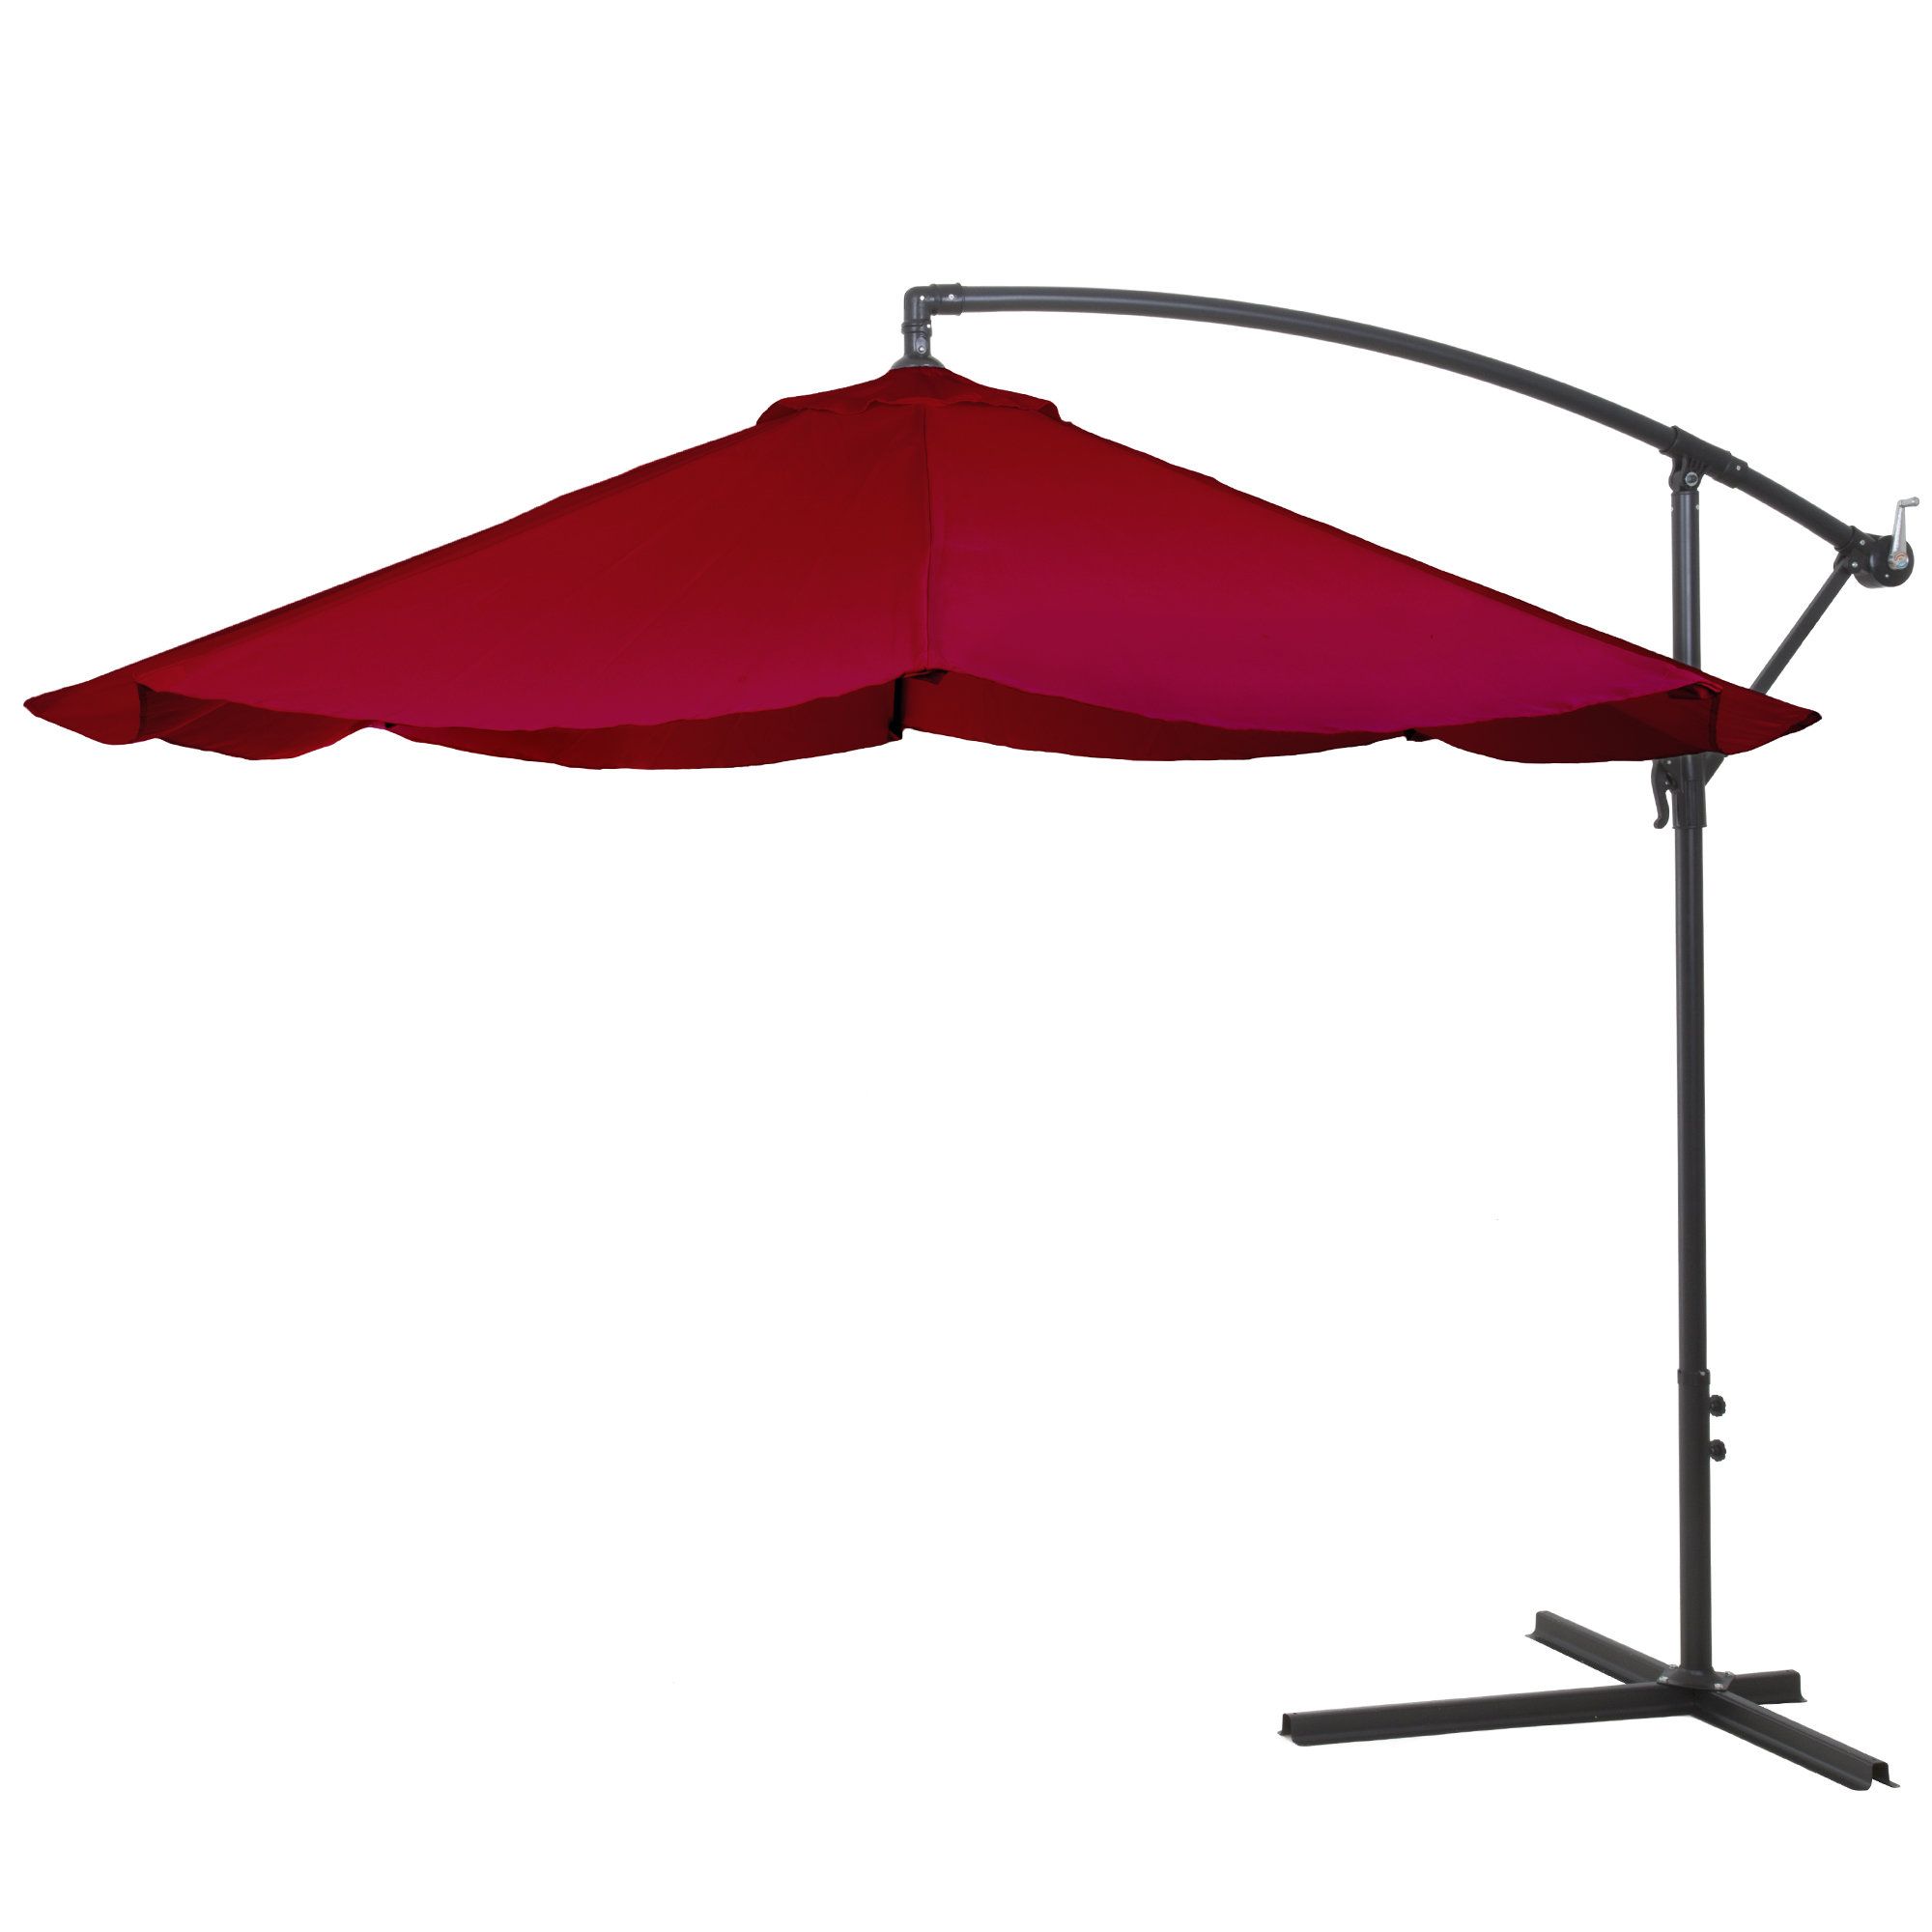 Vassalboro Cantilever Umbrellas For Well Known Vassalboro 10' Cantilever Umbrella (View 4 of 20)